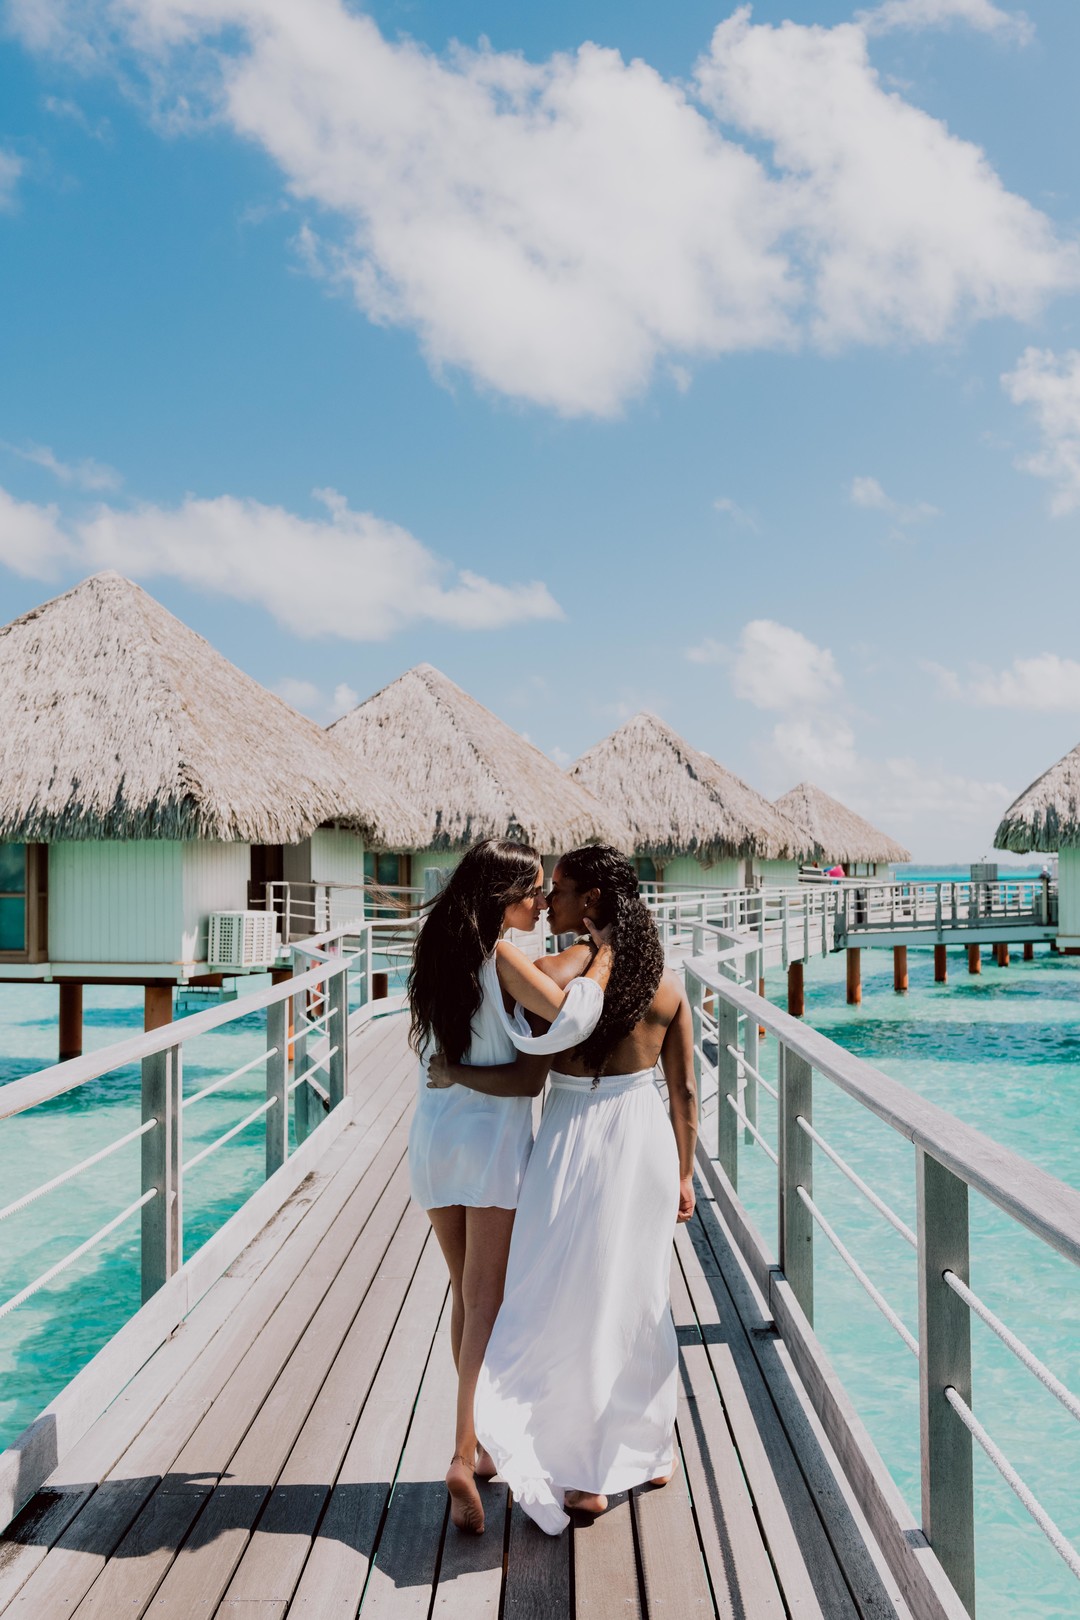 Beach honeymoon photos in Bora Bora two brides white dresses clear blue oceans palm trees